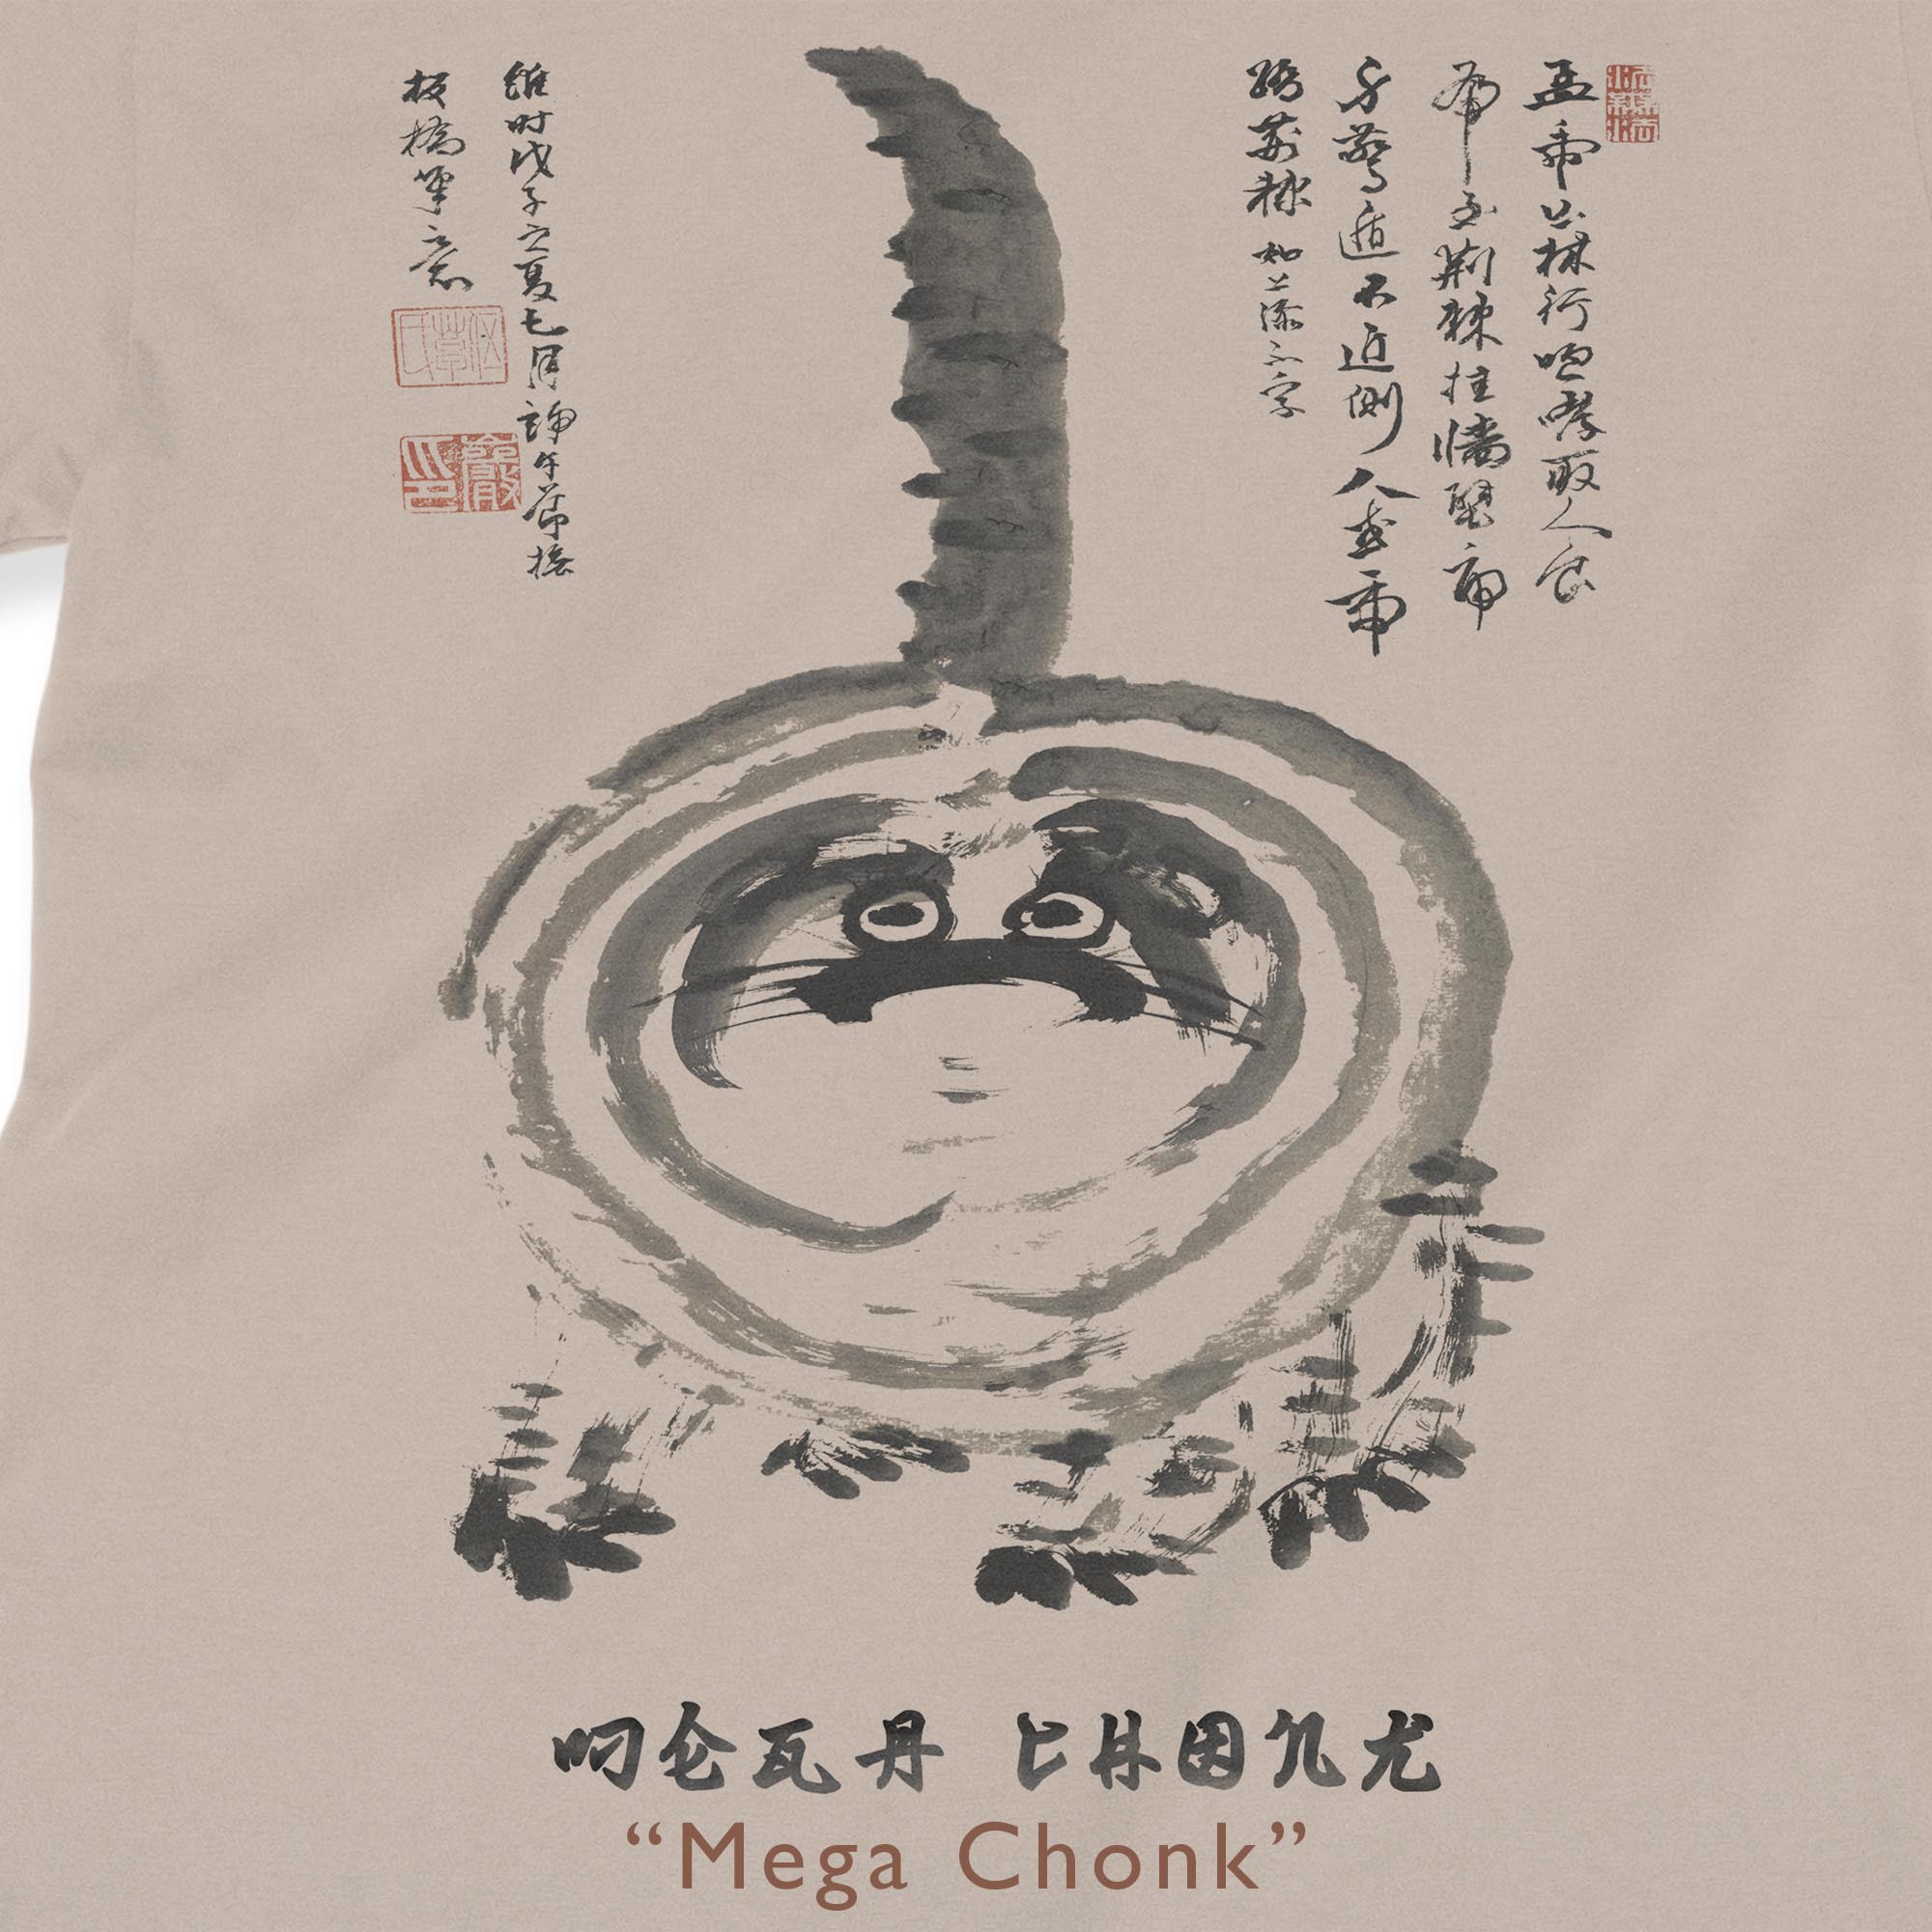 T-Shirts S / Sand Zen "Mega Chonk" Fat Housecat, Antique Japanese Kawaii Cute Brush Painting Kitty Cat Gift Pet Lover Chinese Graphic Cotton T-Shirt